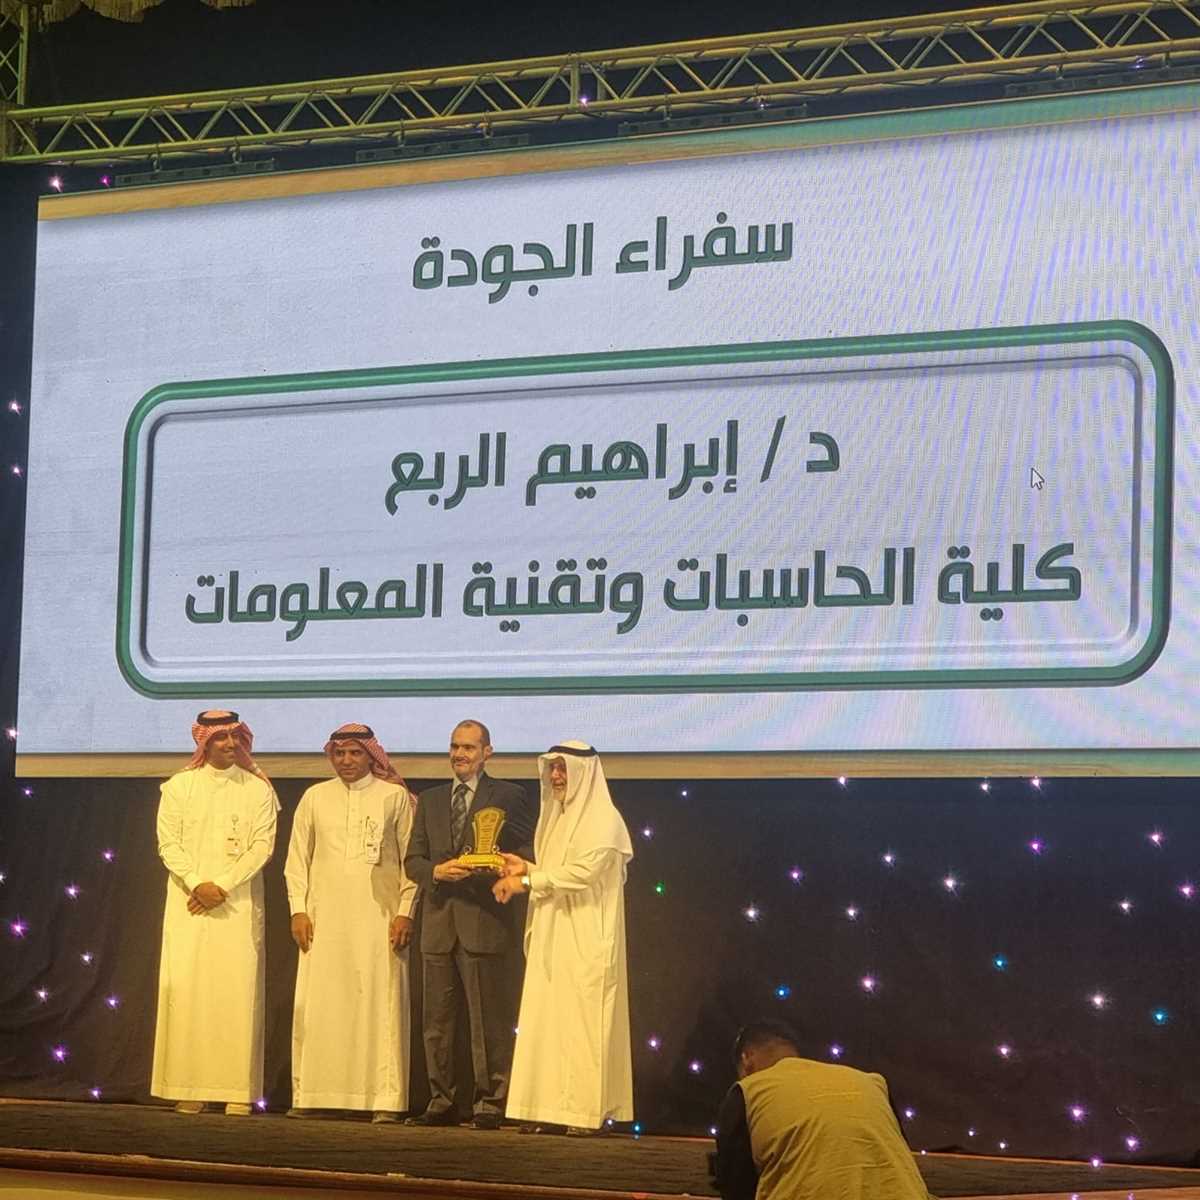 Dr. Ibrahim Al-Ruba’ received the title of Quality Ambassador 